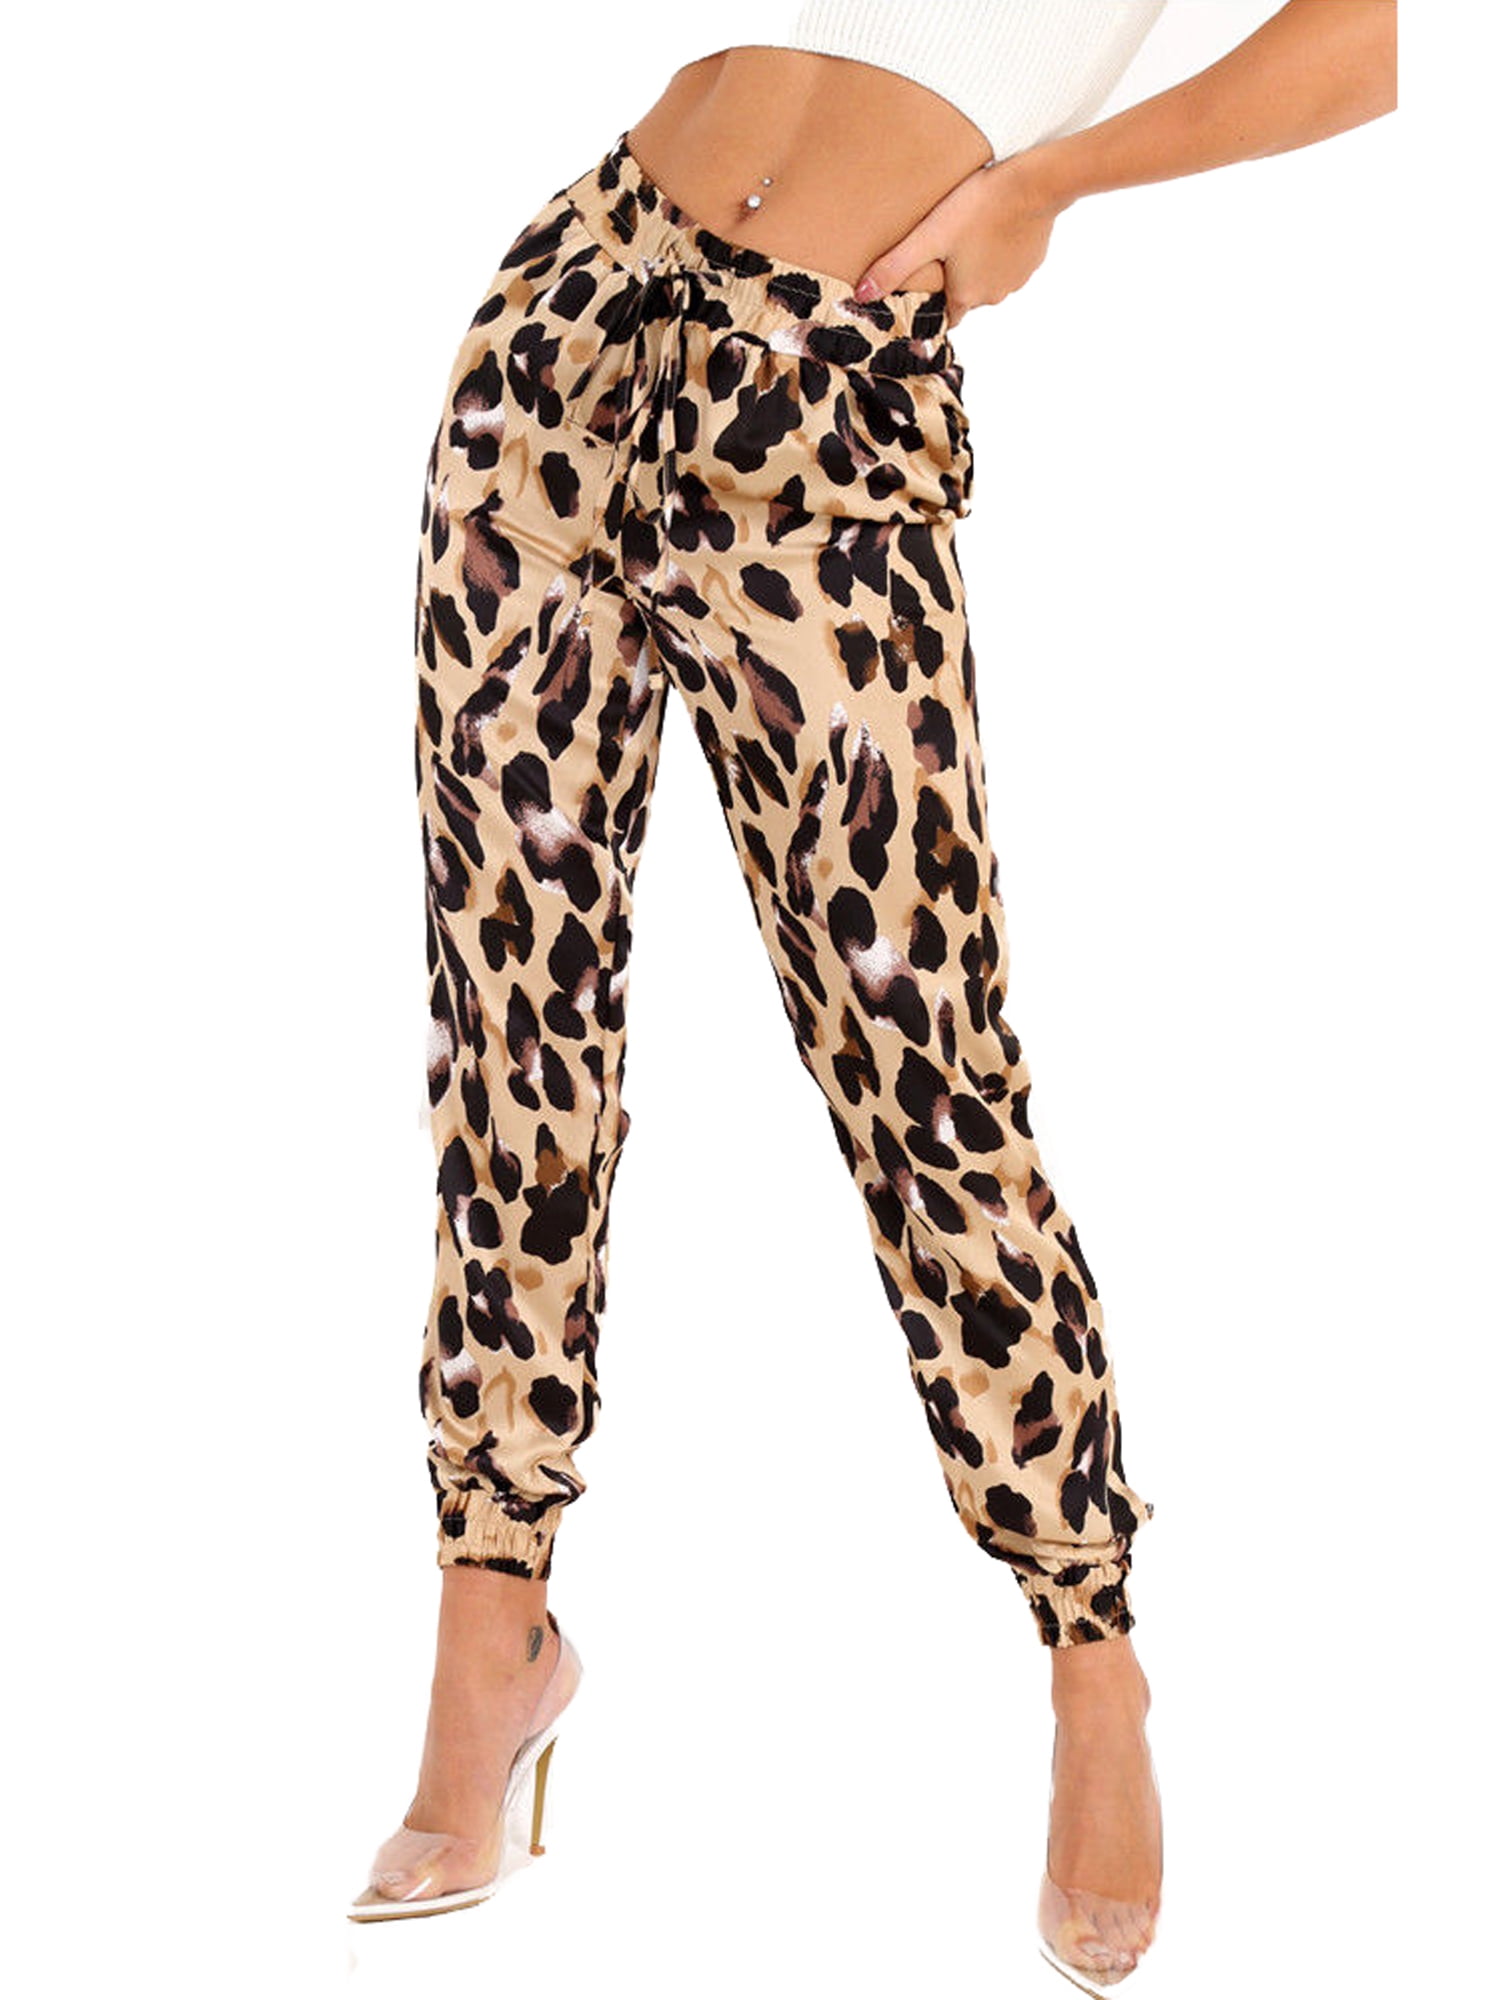 high waisted leopard pants